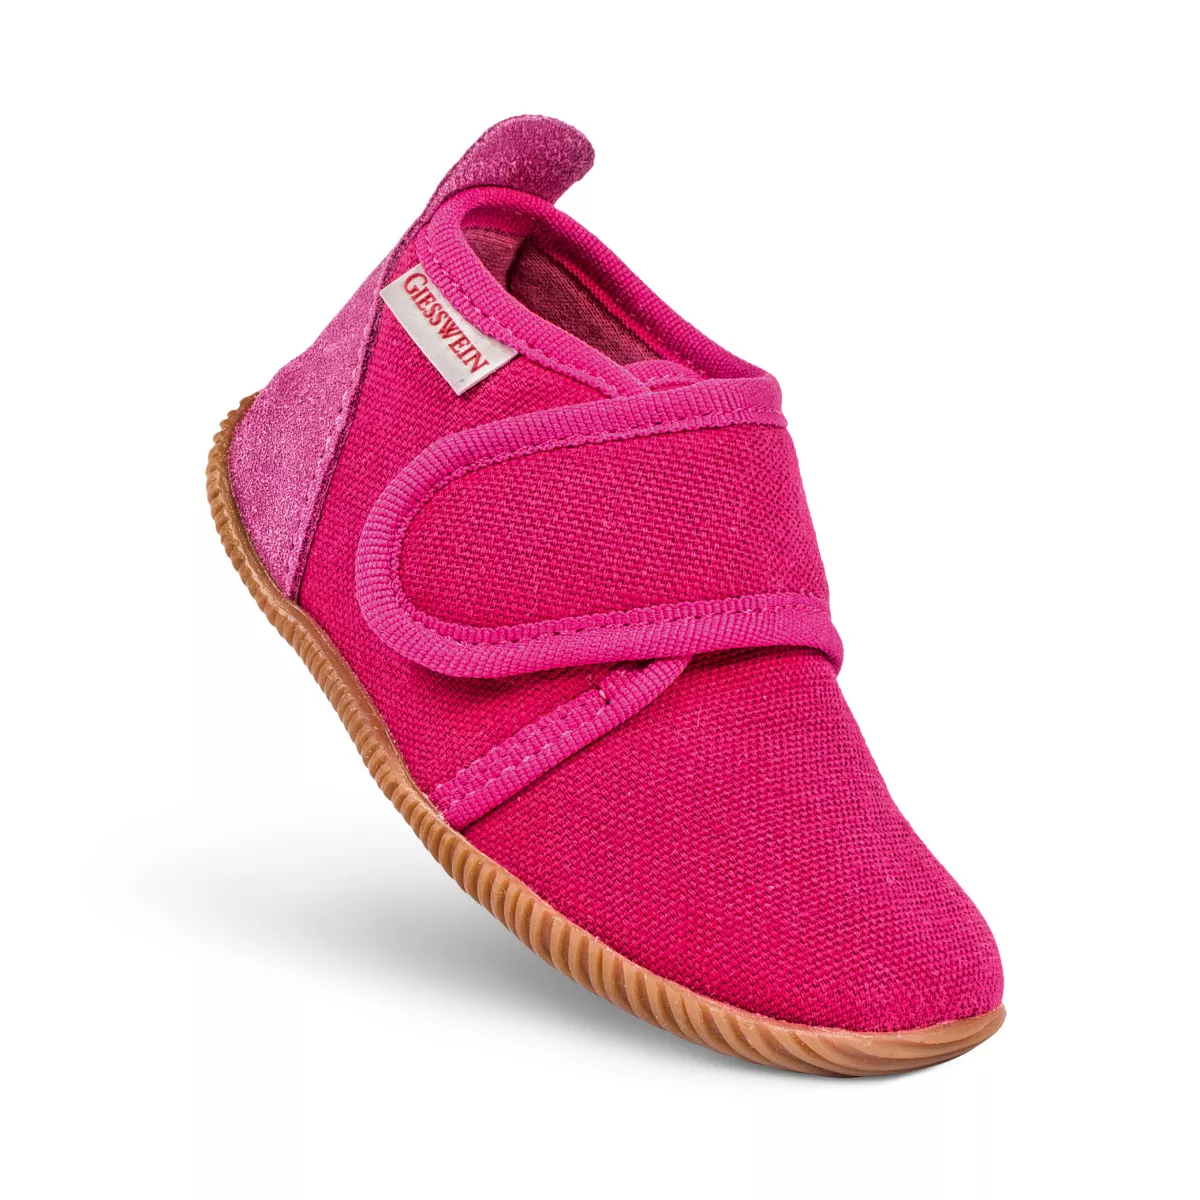 Papuci de casa pentru copii, model Strass, roz zmeura 23